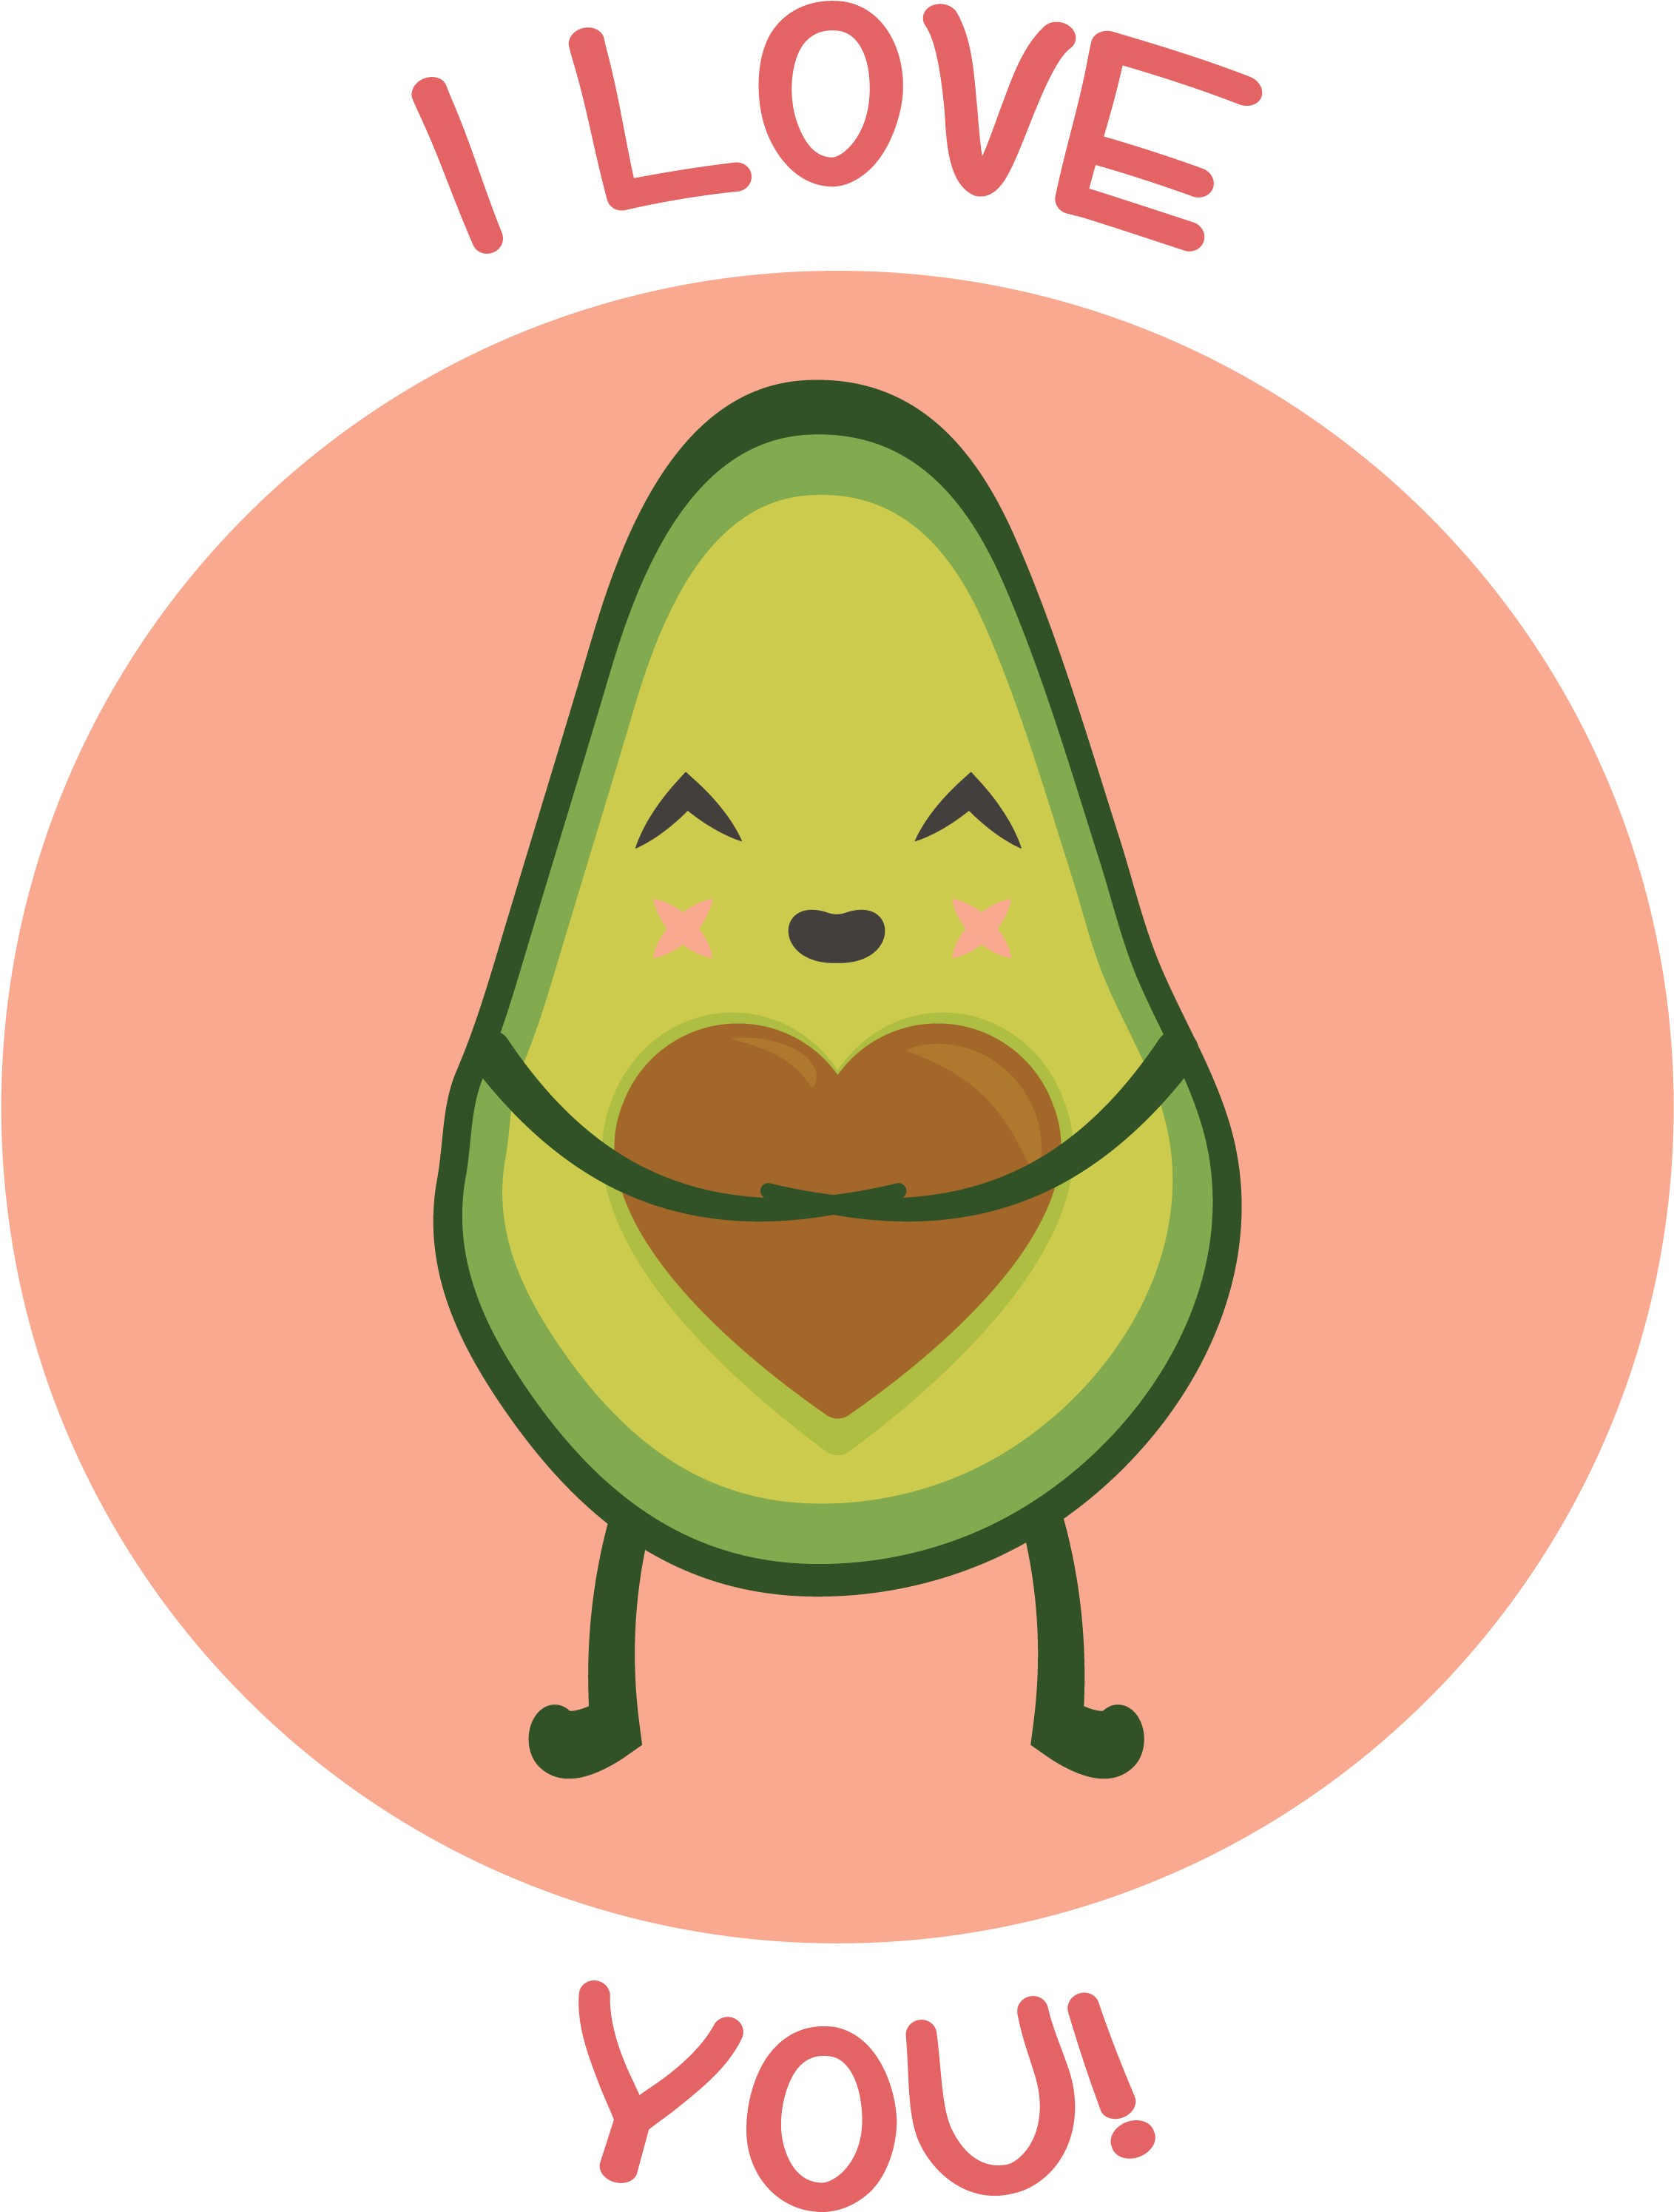 Cute Avocado Illustration - Avocado Love You (2481x3508)